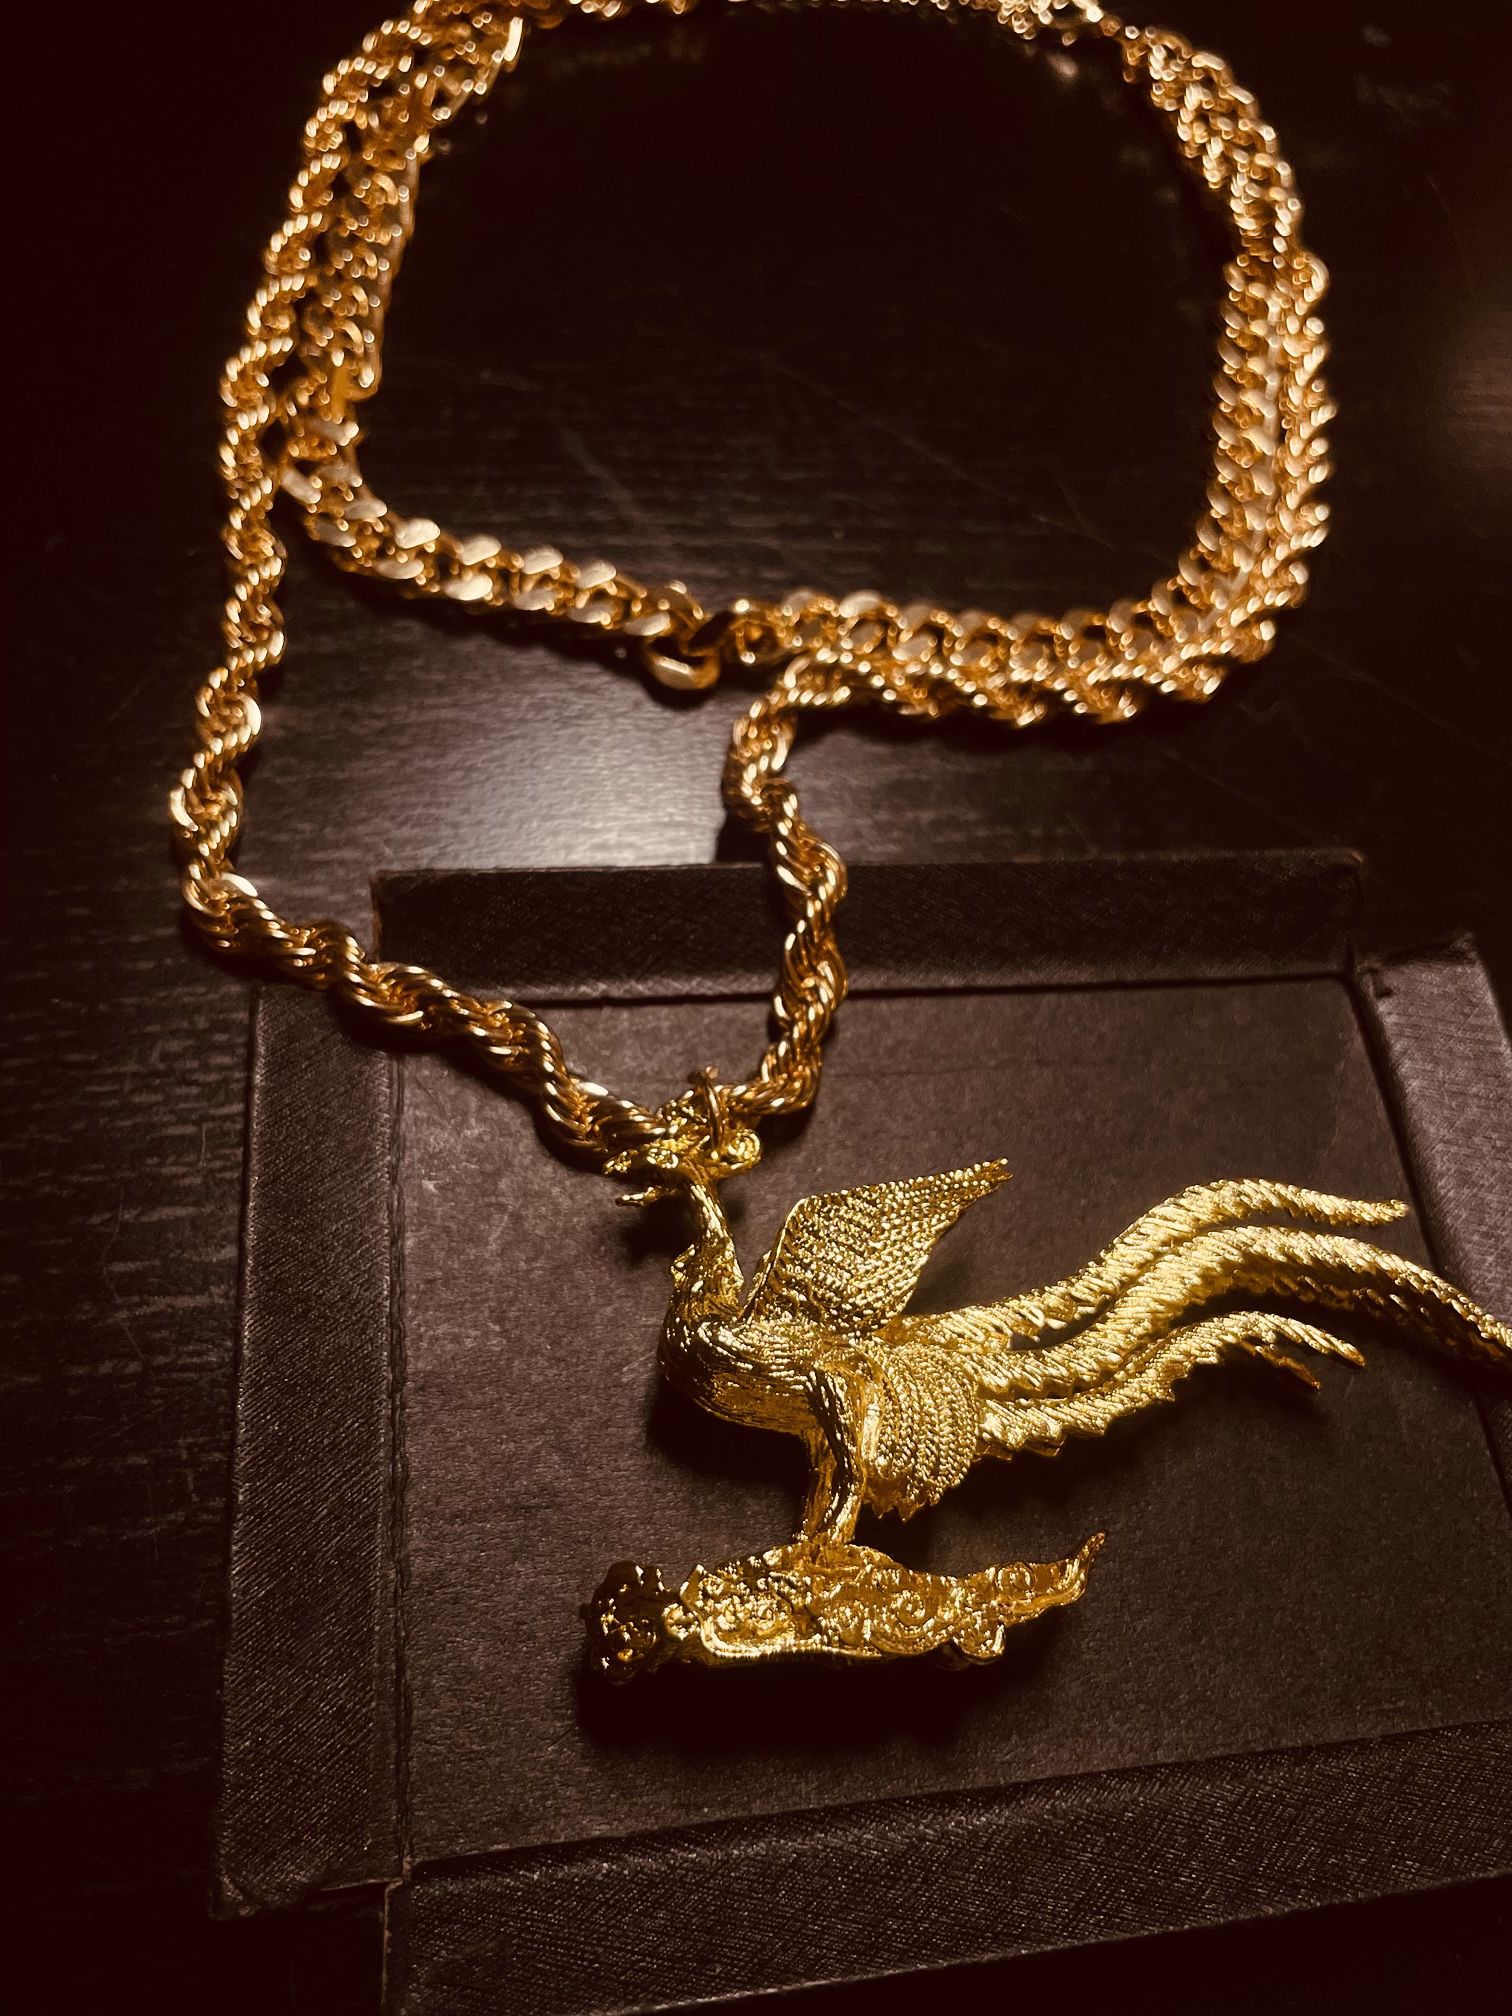 Men’s Or Women’s Hip hop Phoenix Titanium Steel and gold necklace